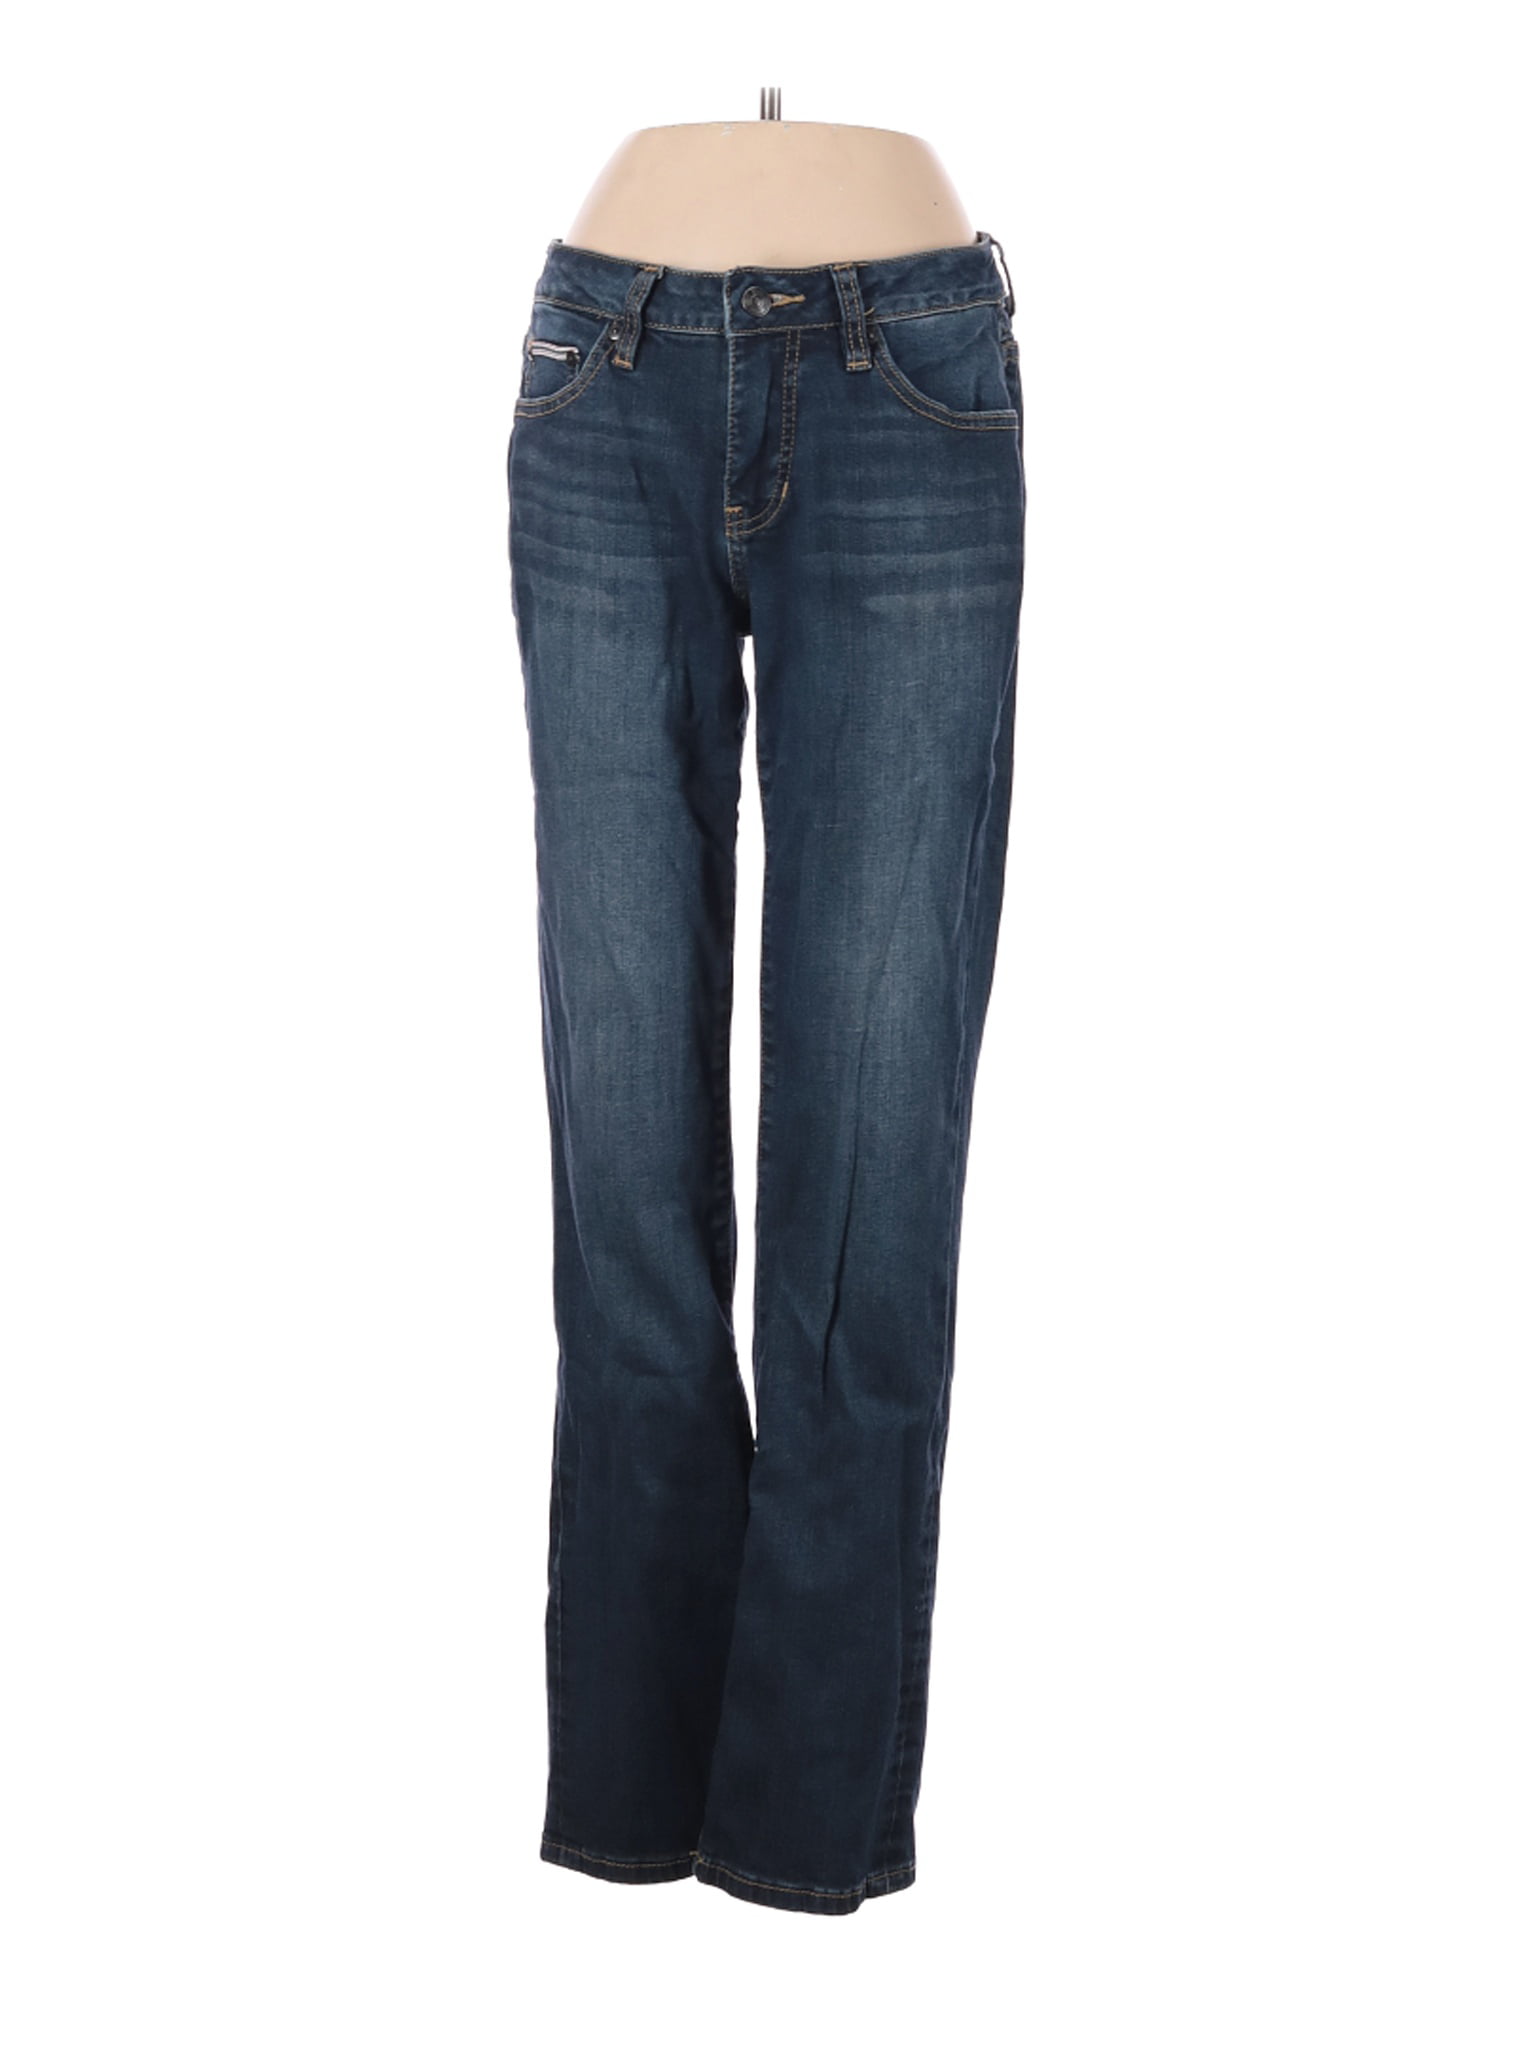 JAG Jeans - Pre-Owned Jag Jeans Women's Size 2 Jeans - Walmart.com ...